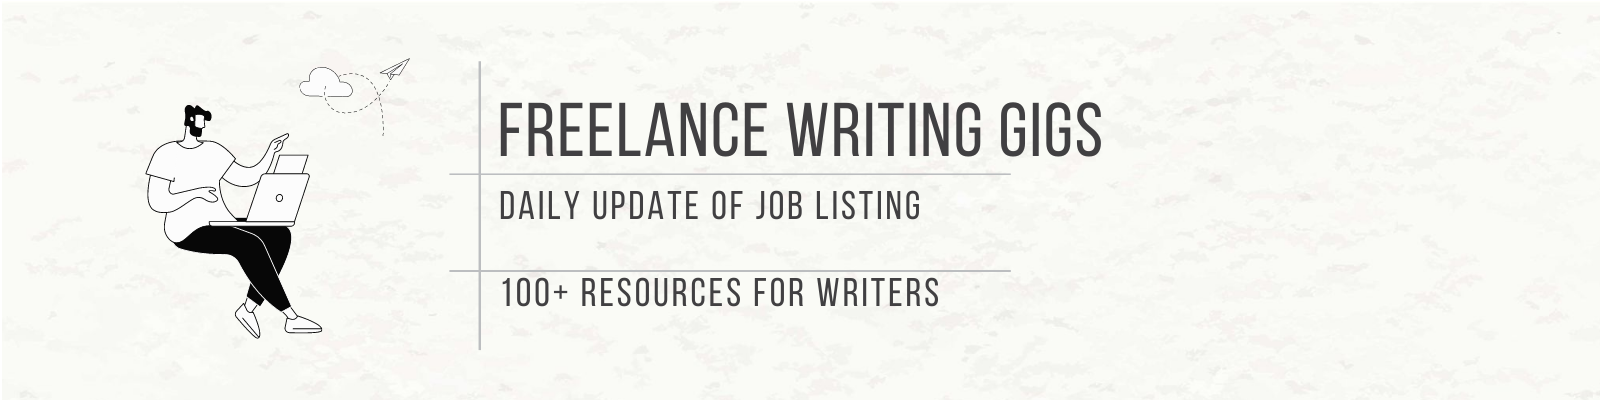 freelance writing gigs banner 